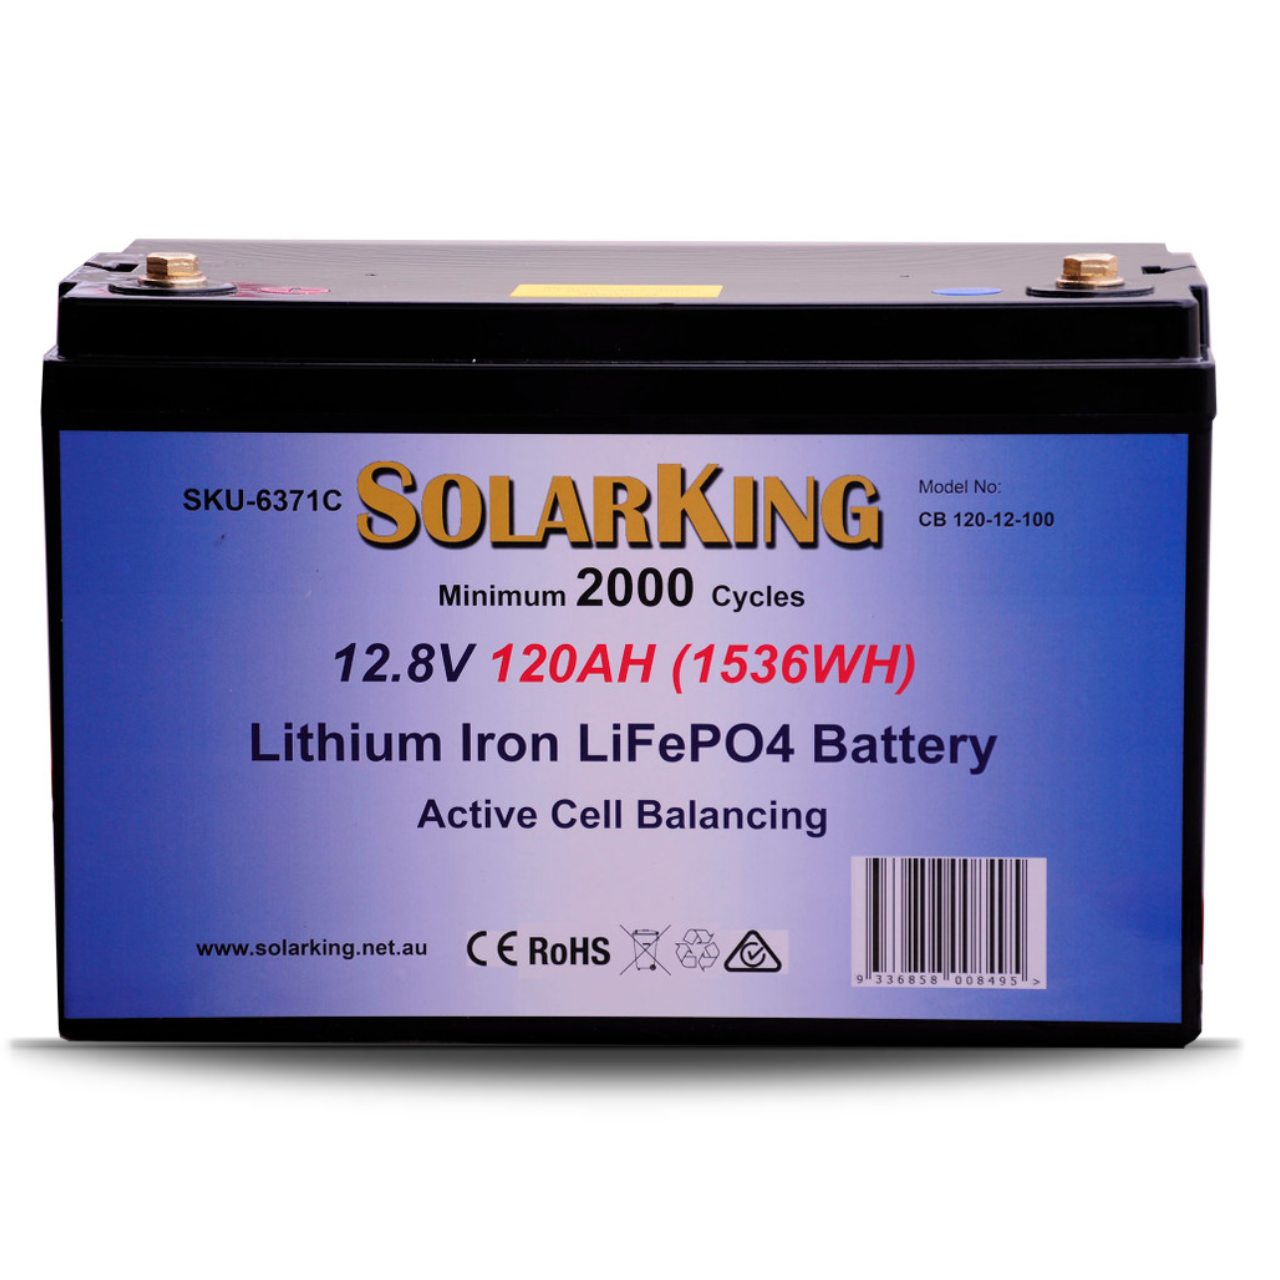 120AH Lithium Iron SolarKing Battery CB-120-12-100